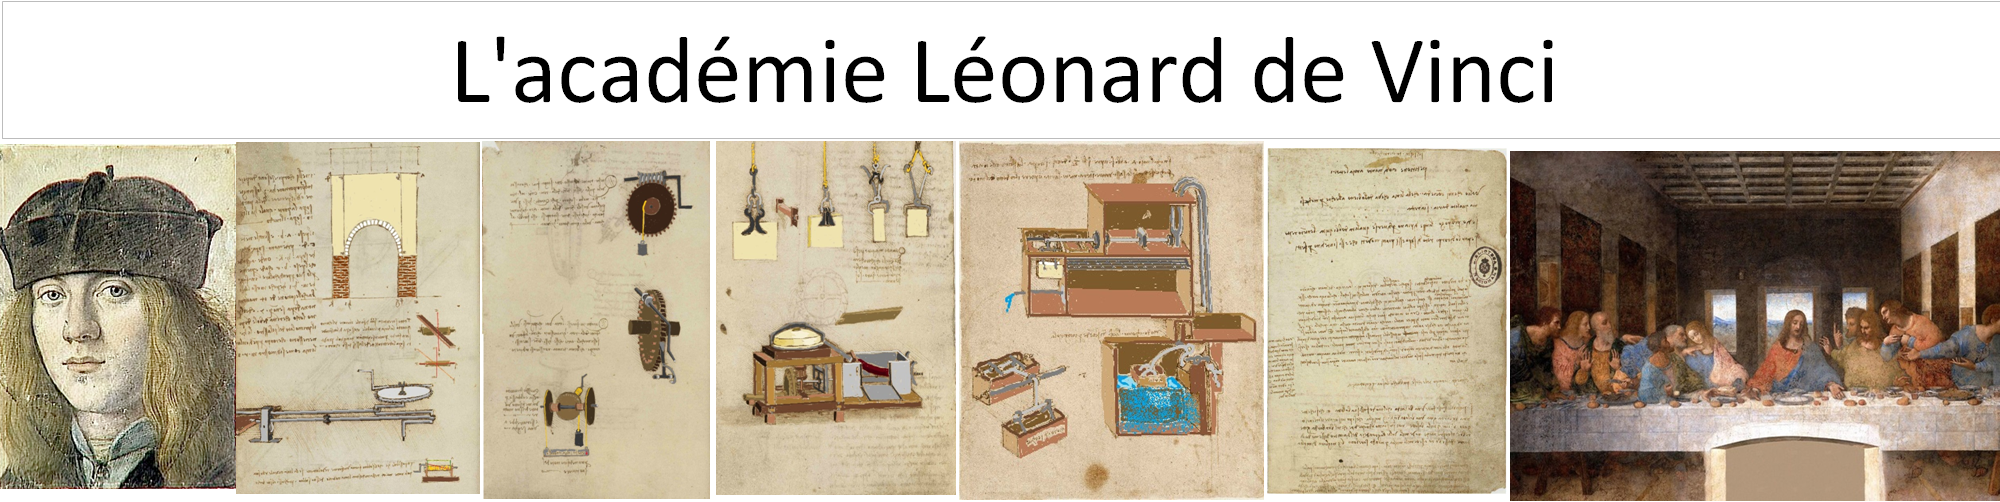 L'académie Léonard de Vinci